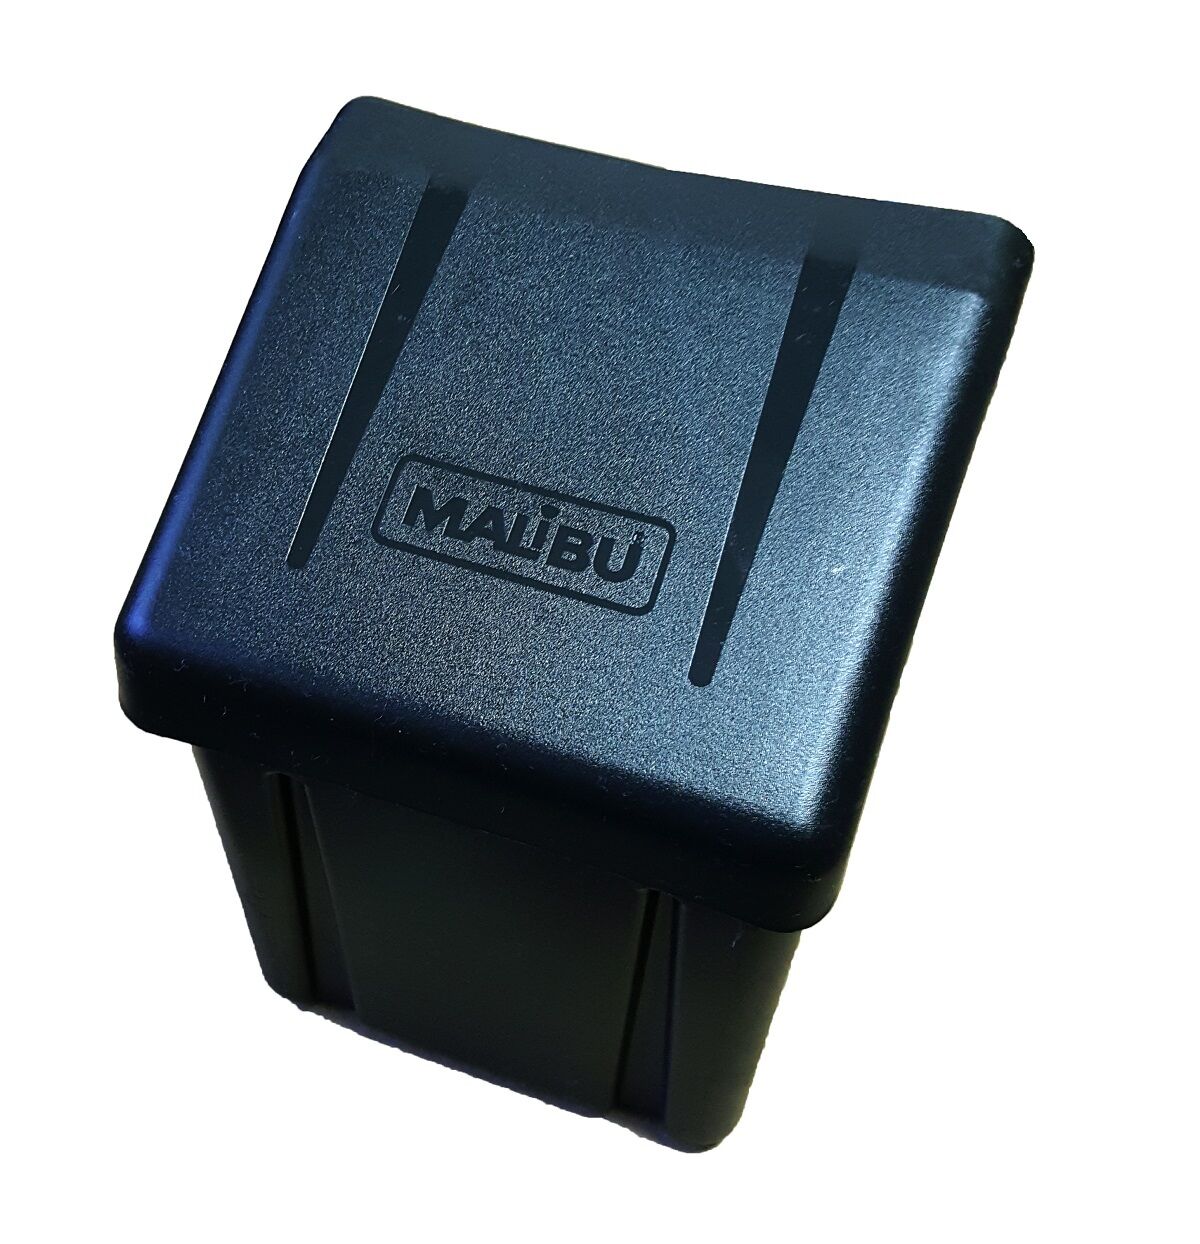 Malibu Ml200rt 200 Watt 12v Ac Low Voltage Power Pack Transformer, Best Seller!